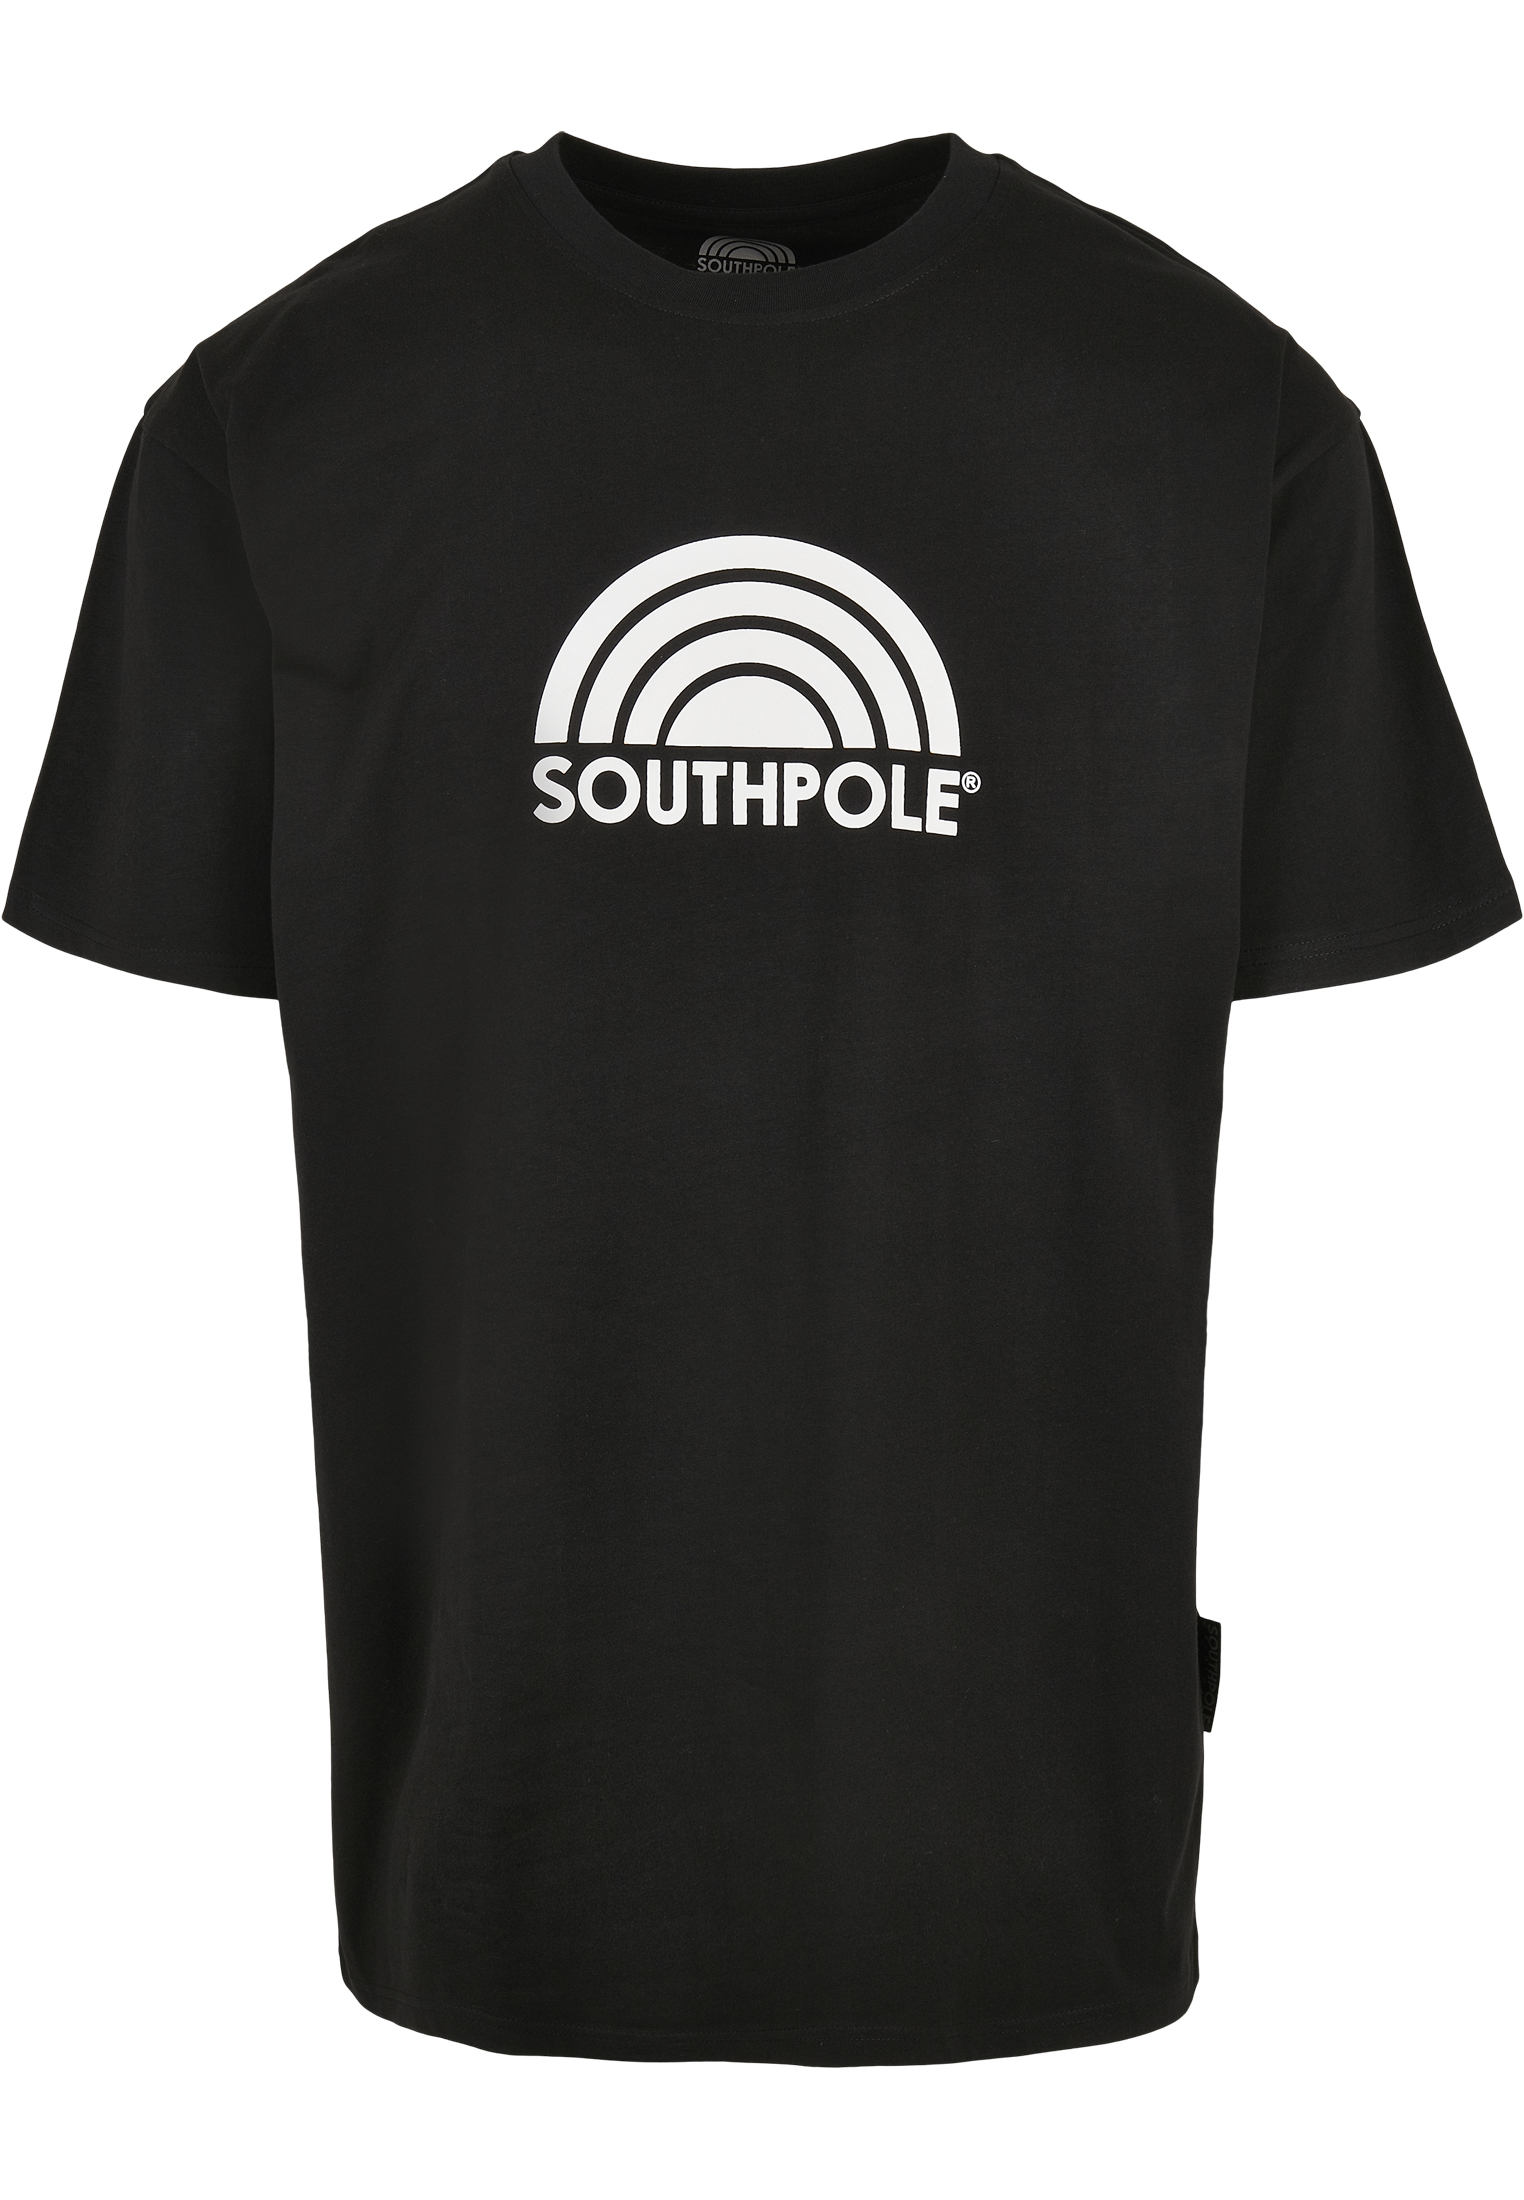 Nos Kollektion Southpole Logo Tee in Farbe black